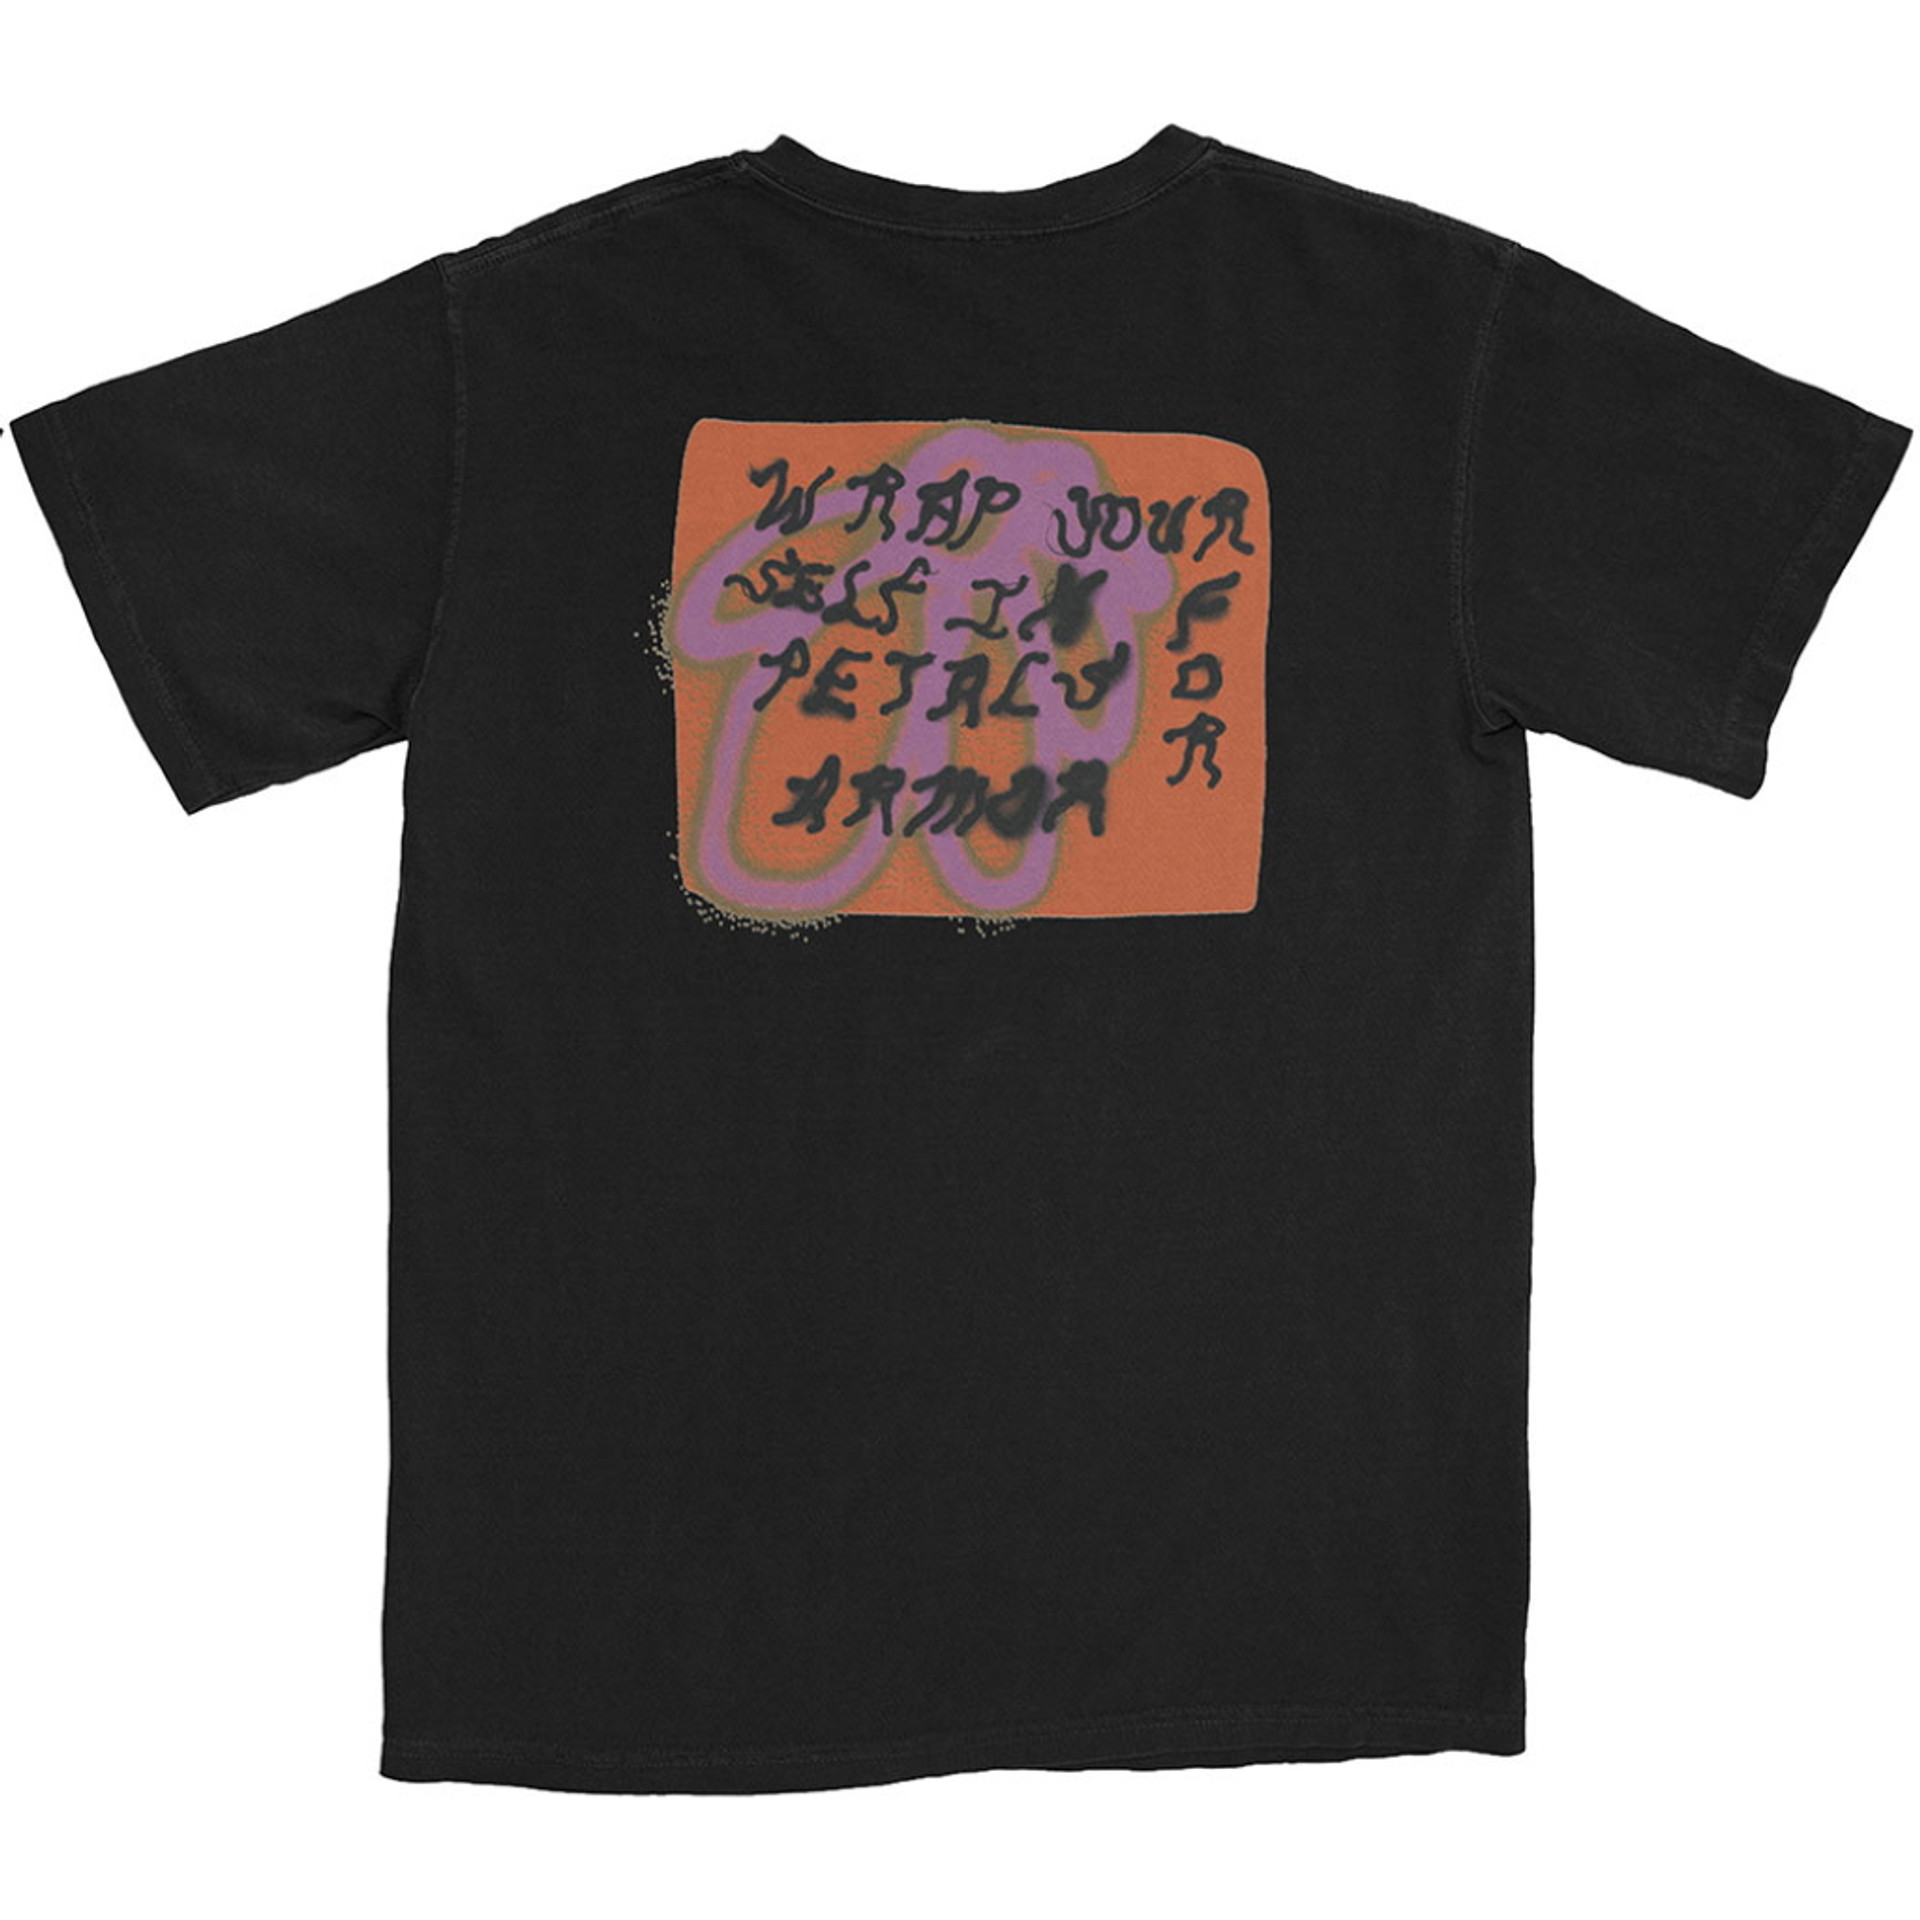 Slipknot 'Sketch Boxes' (Black) T-Shirt